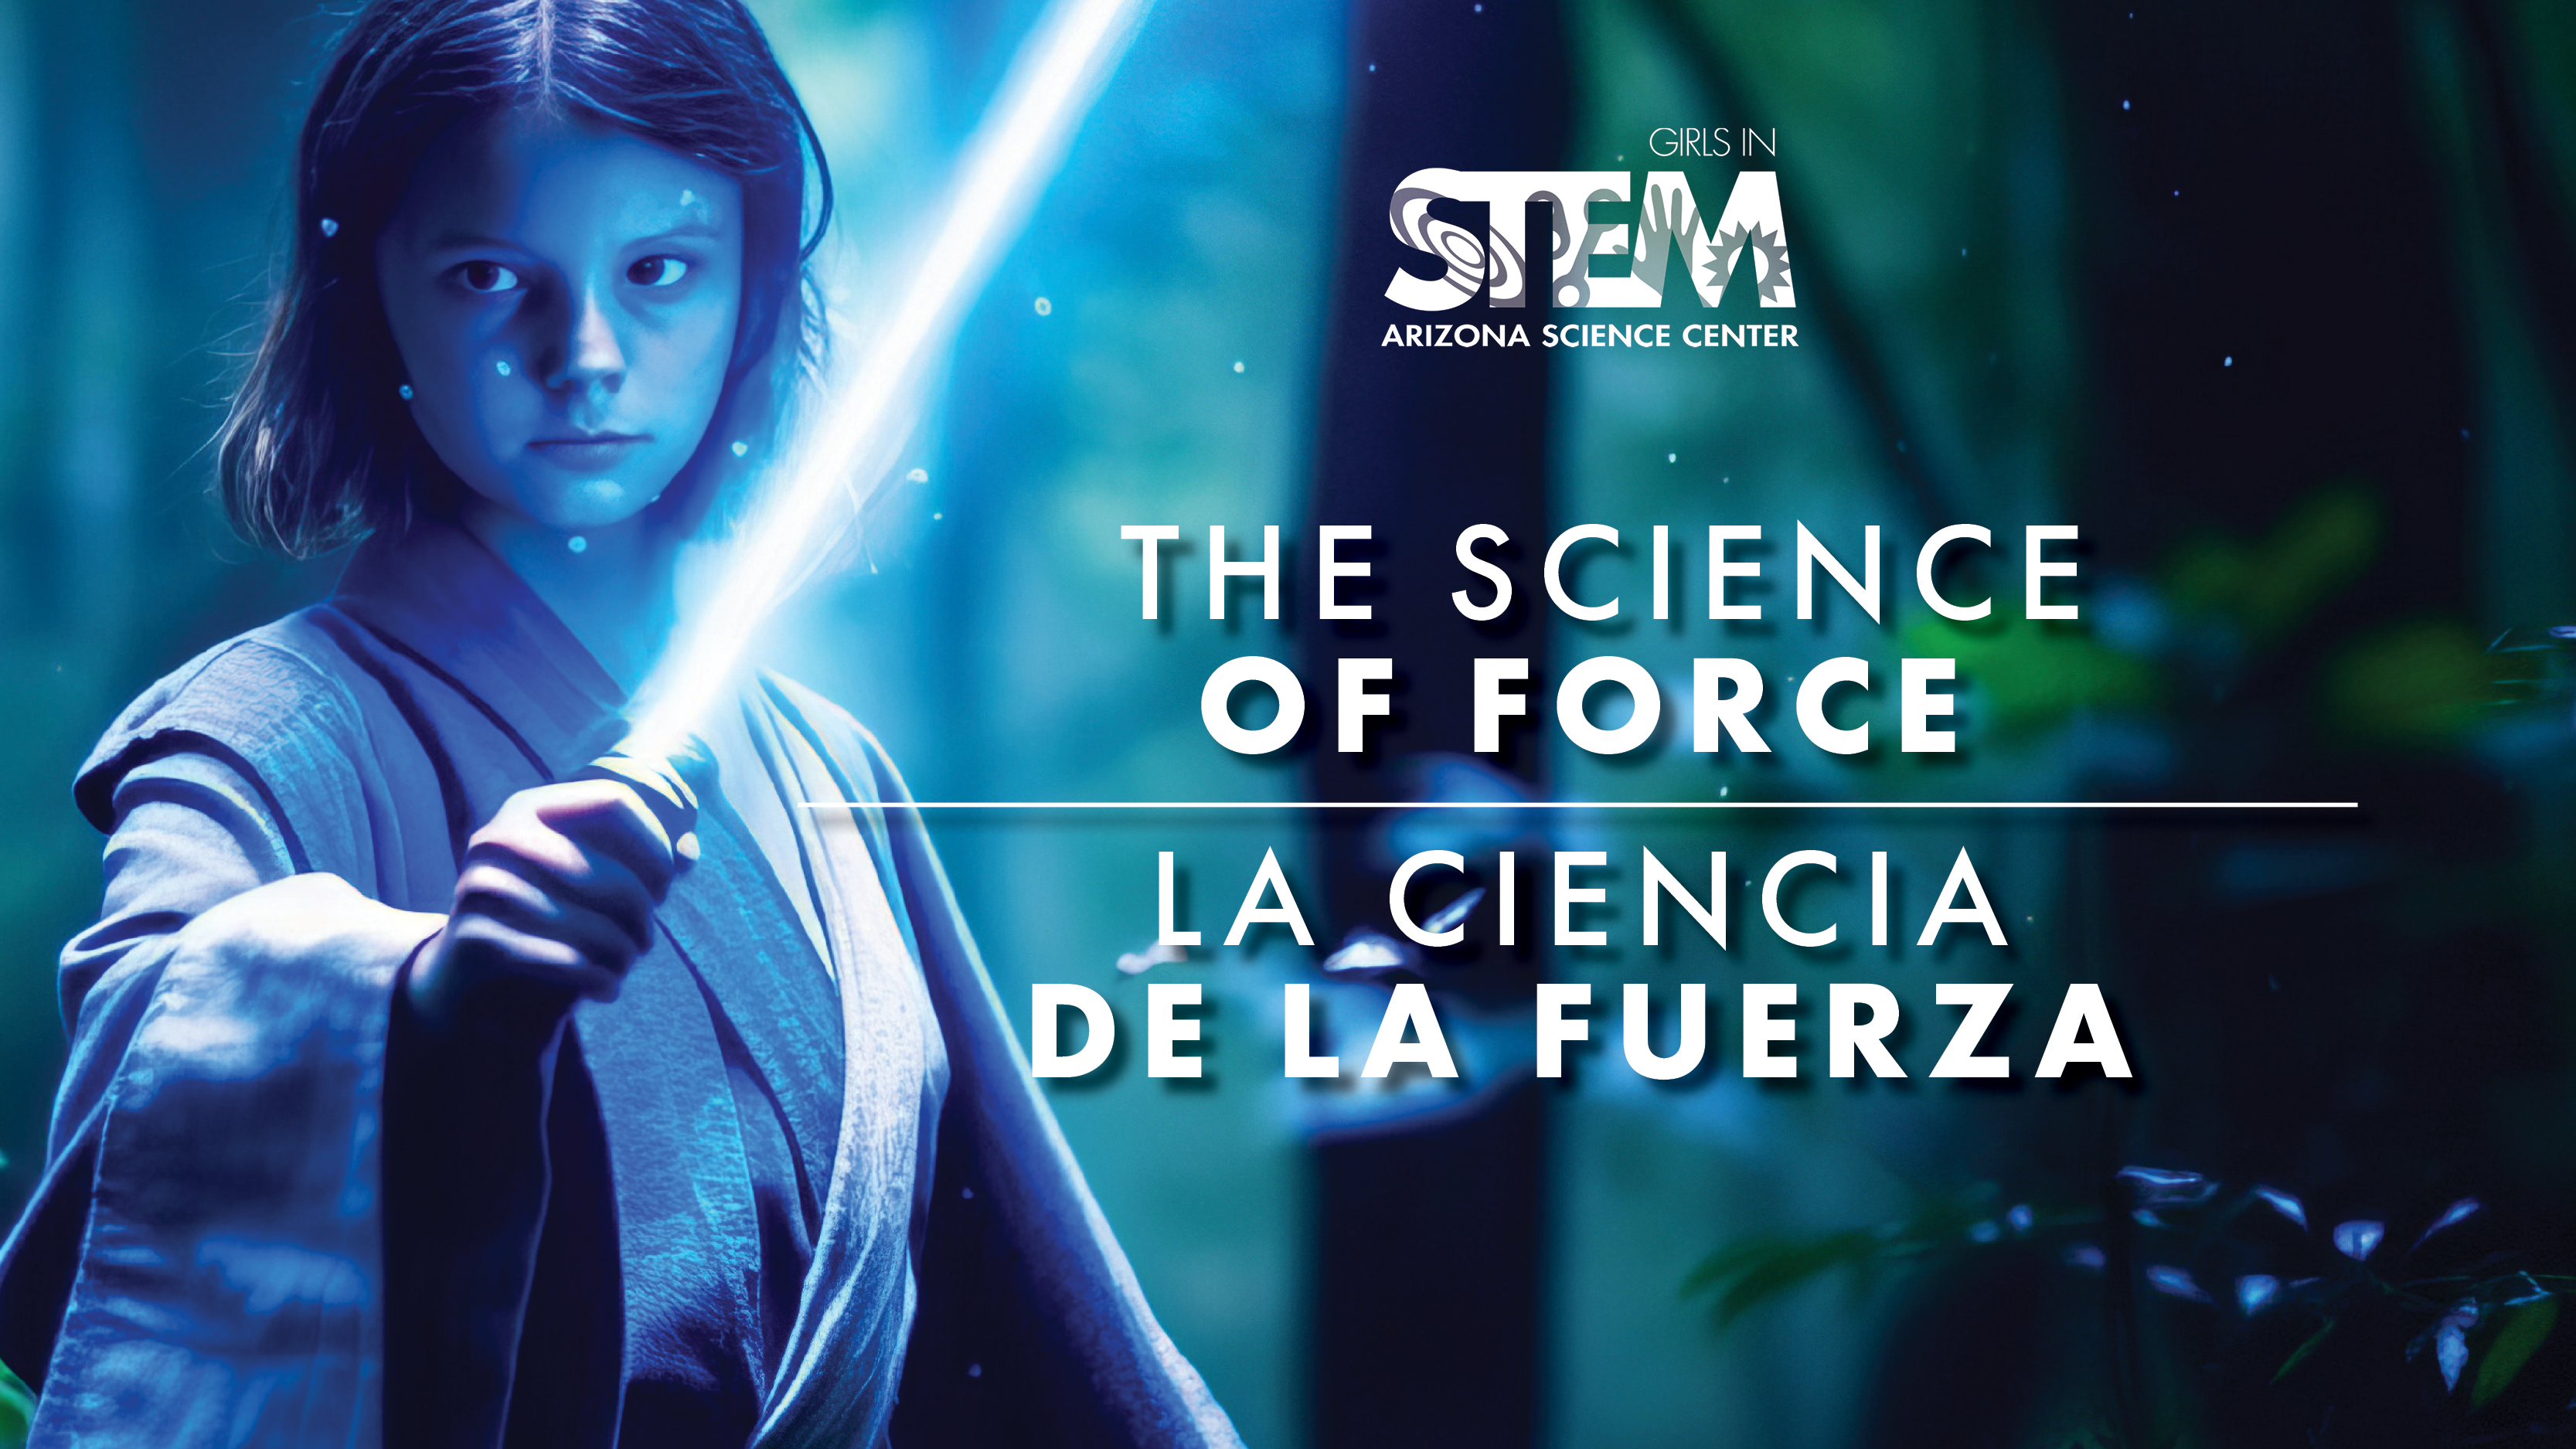 Girls in STEM The Science of Force, La Ciencia de la Fuerza